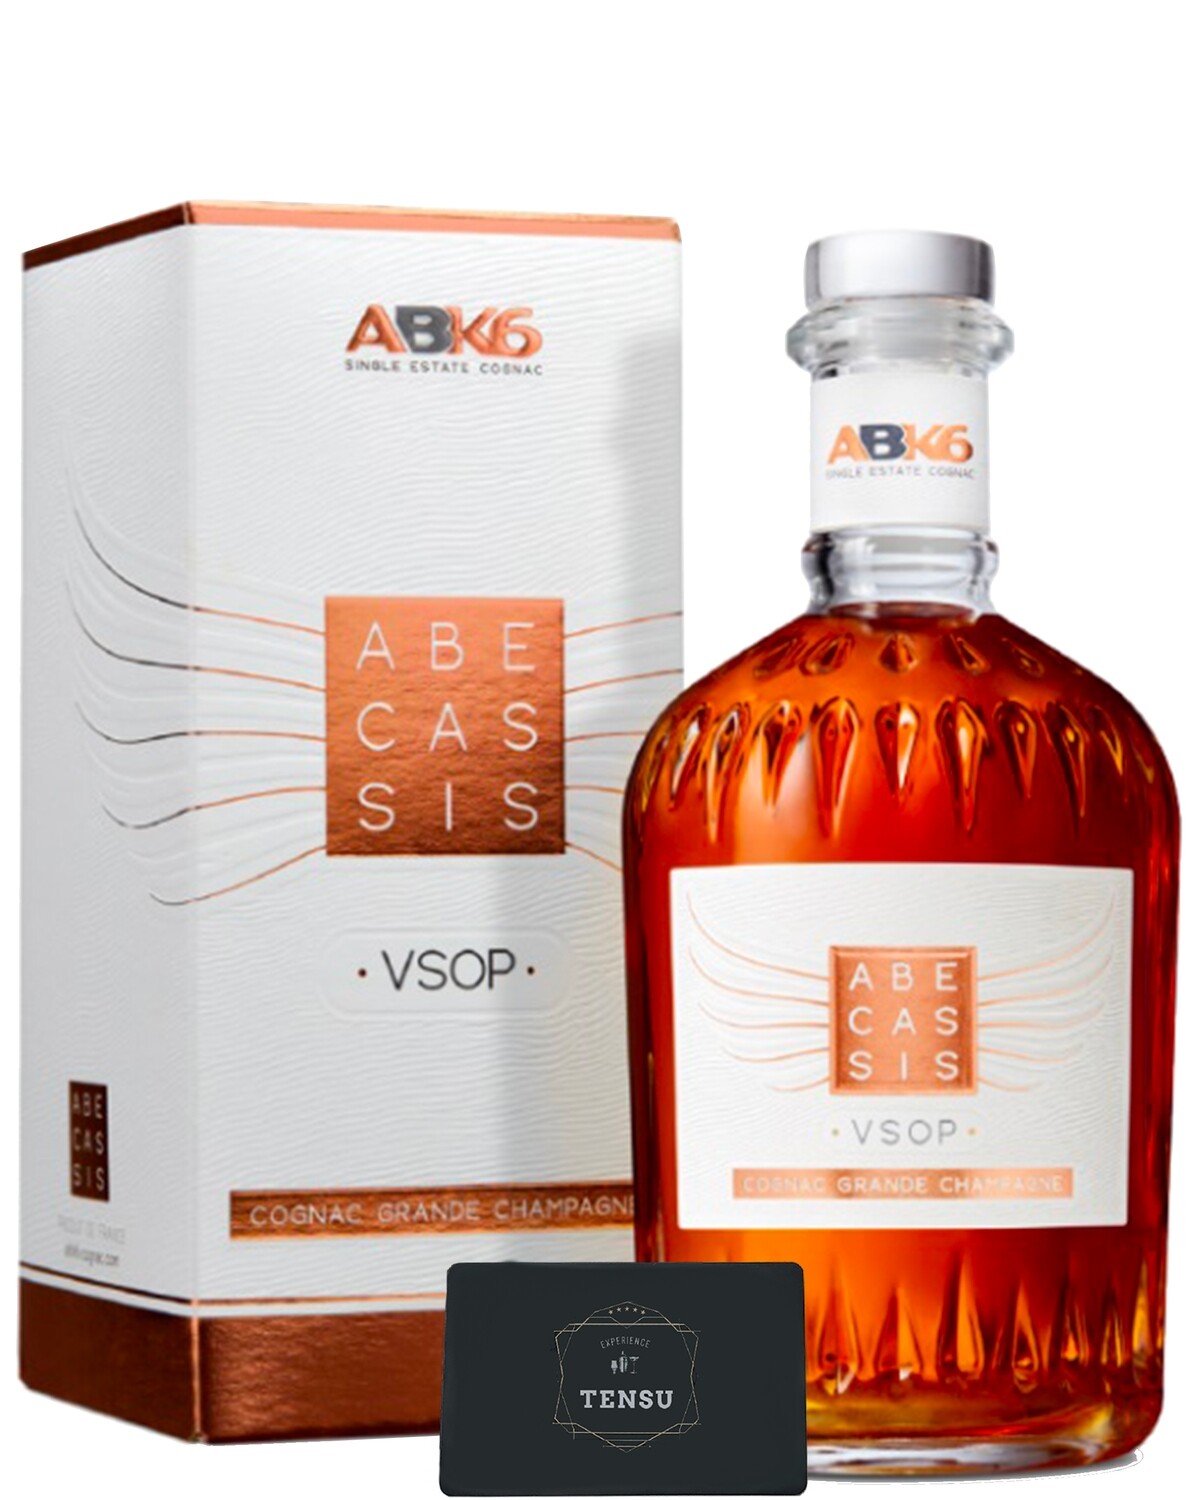 ABK6 VSOP (Cognac Grande Champagne) 40,0 "OB"